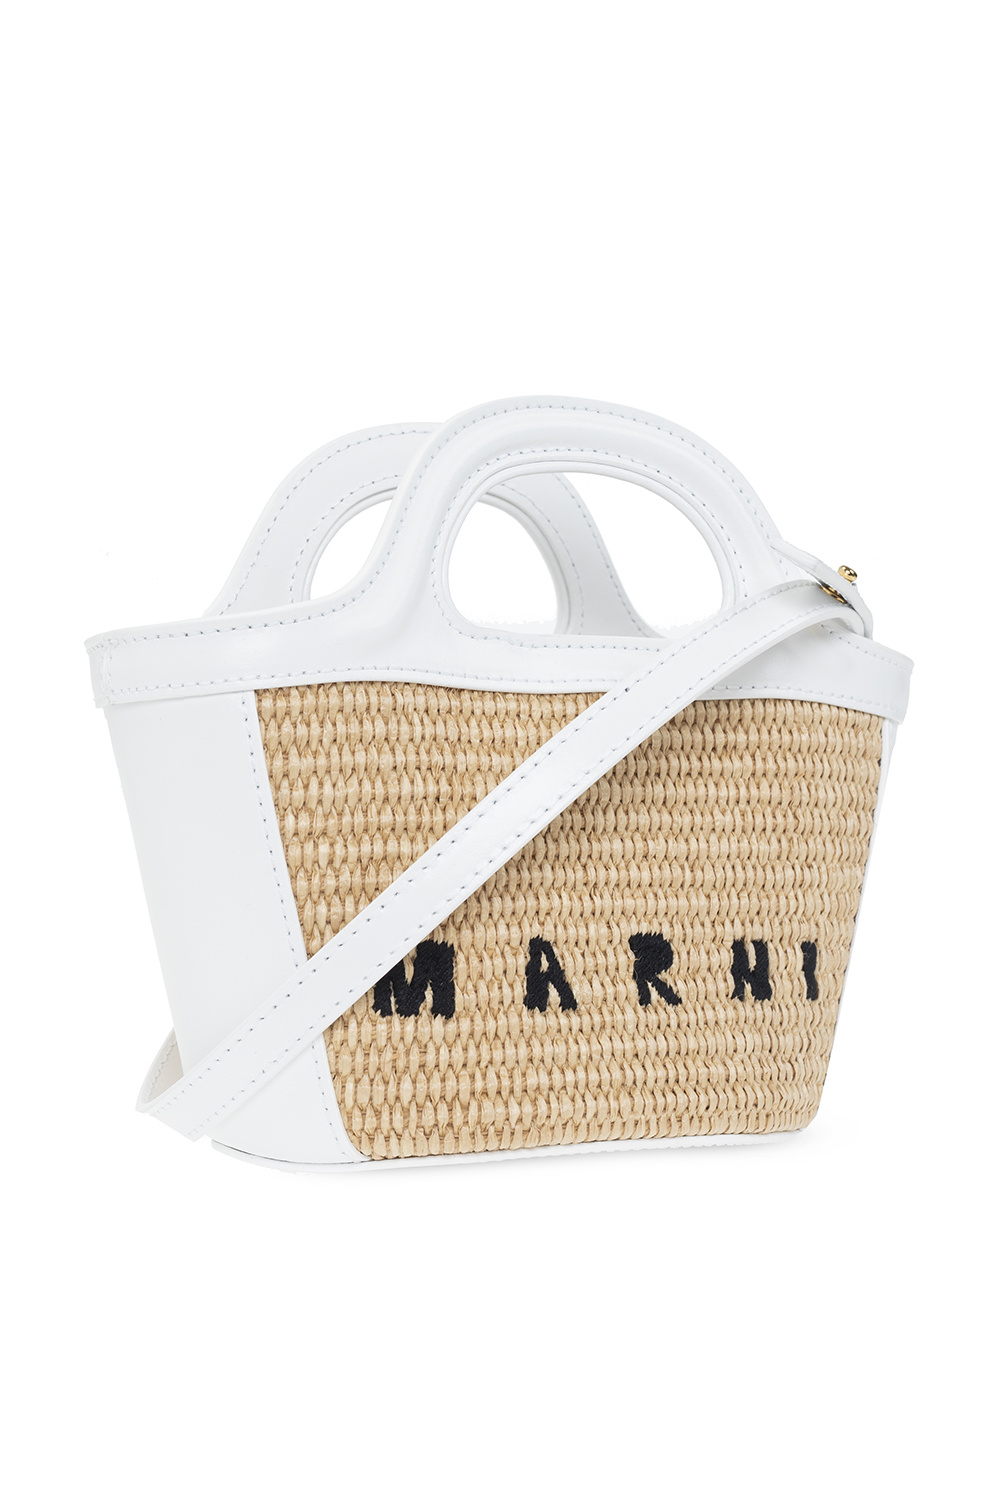 Marni Tropicalia Micro Bag in Sand Storm & Lily White